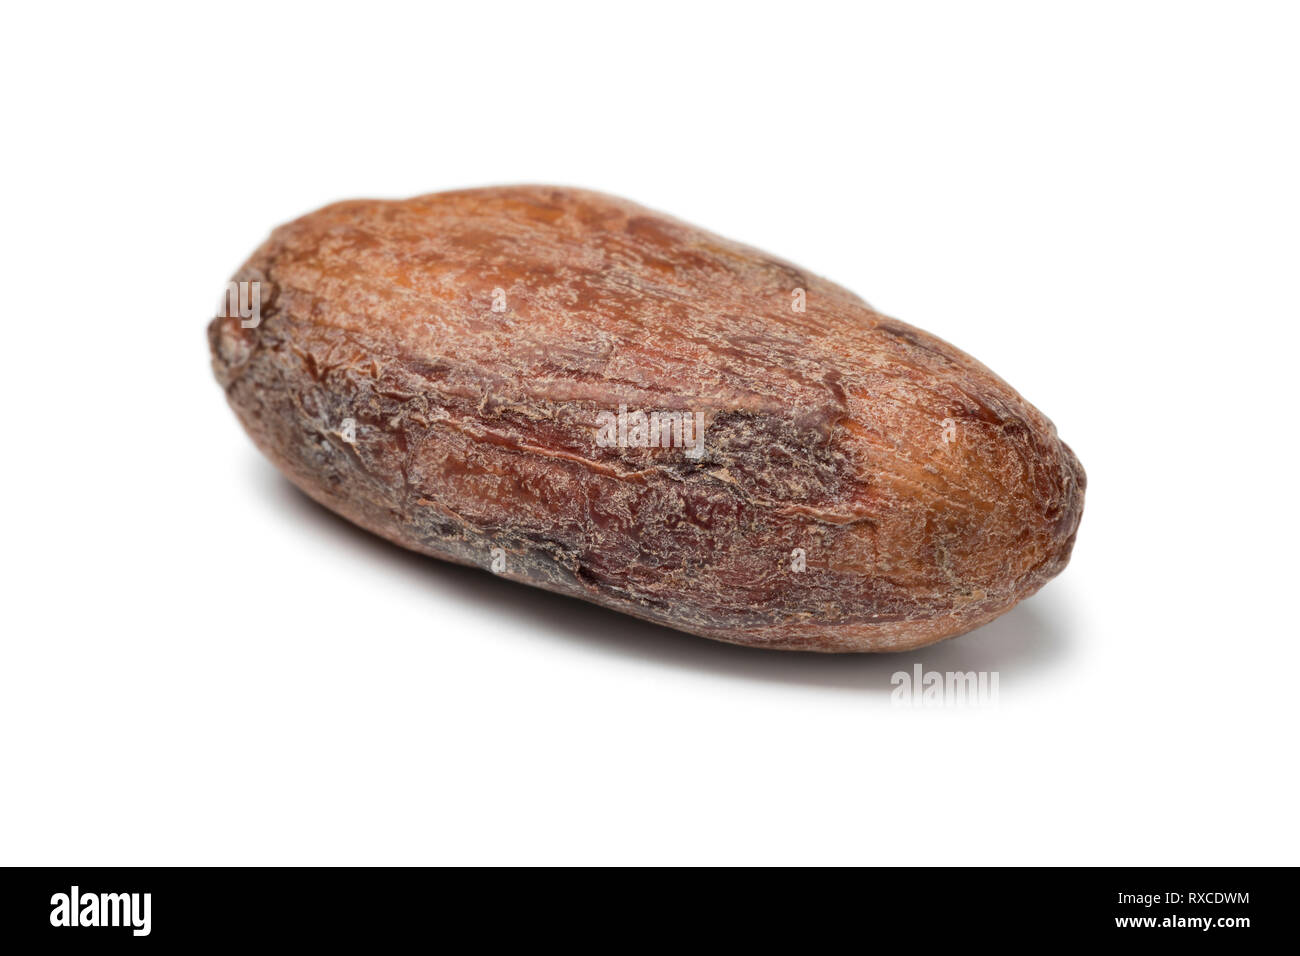 Single whole cocoa bean close up isolated on white background Stock Photo